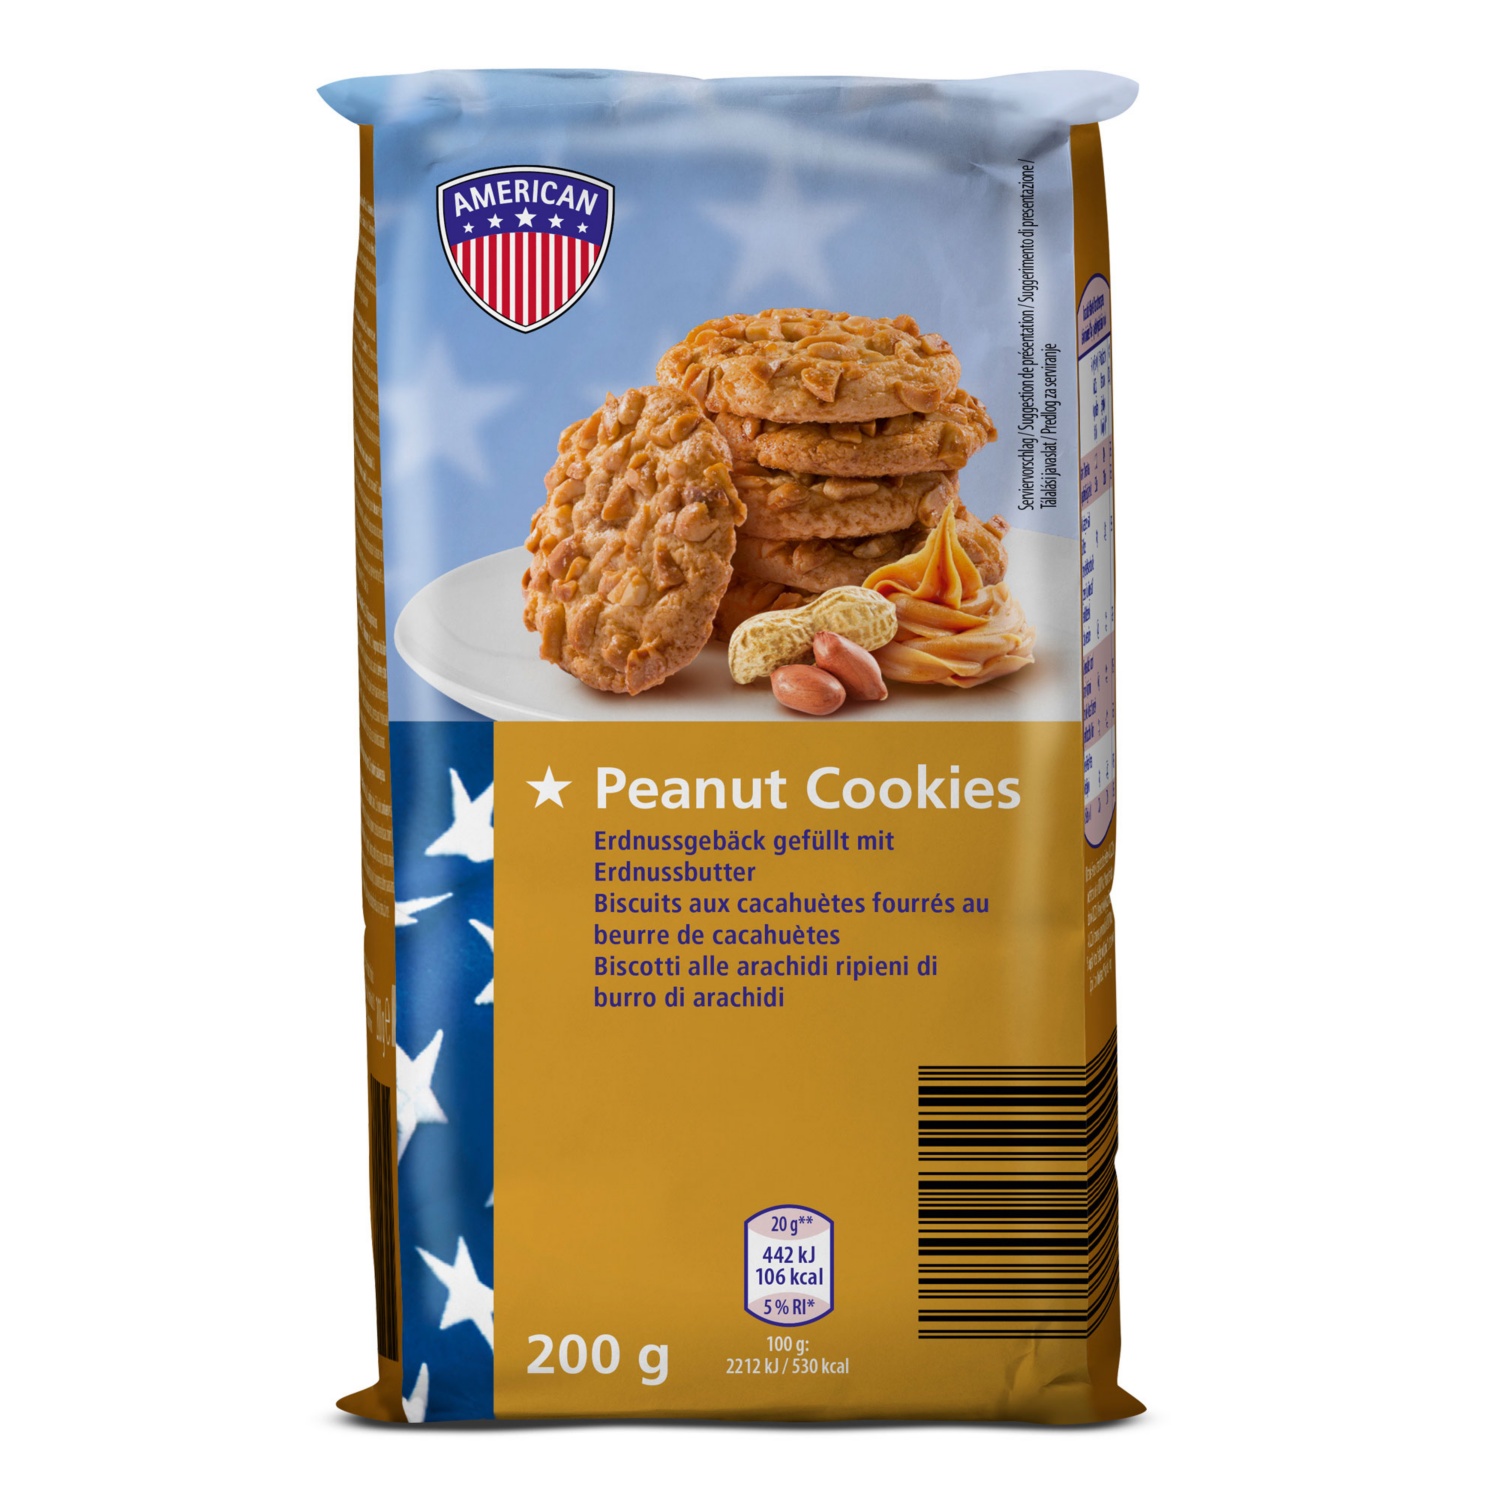 AMERICAN Peanut Cookies, Erdnussbutter